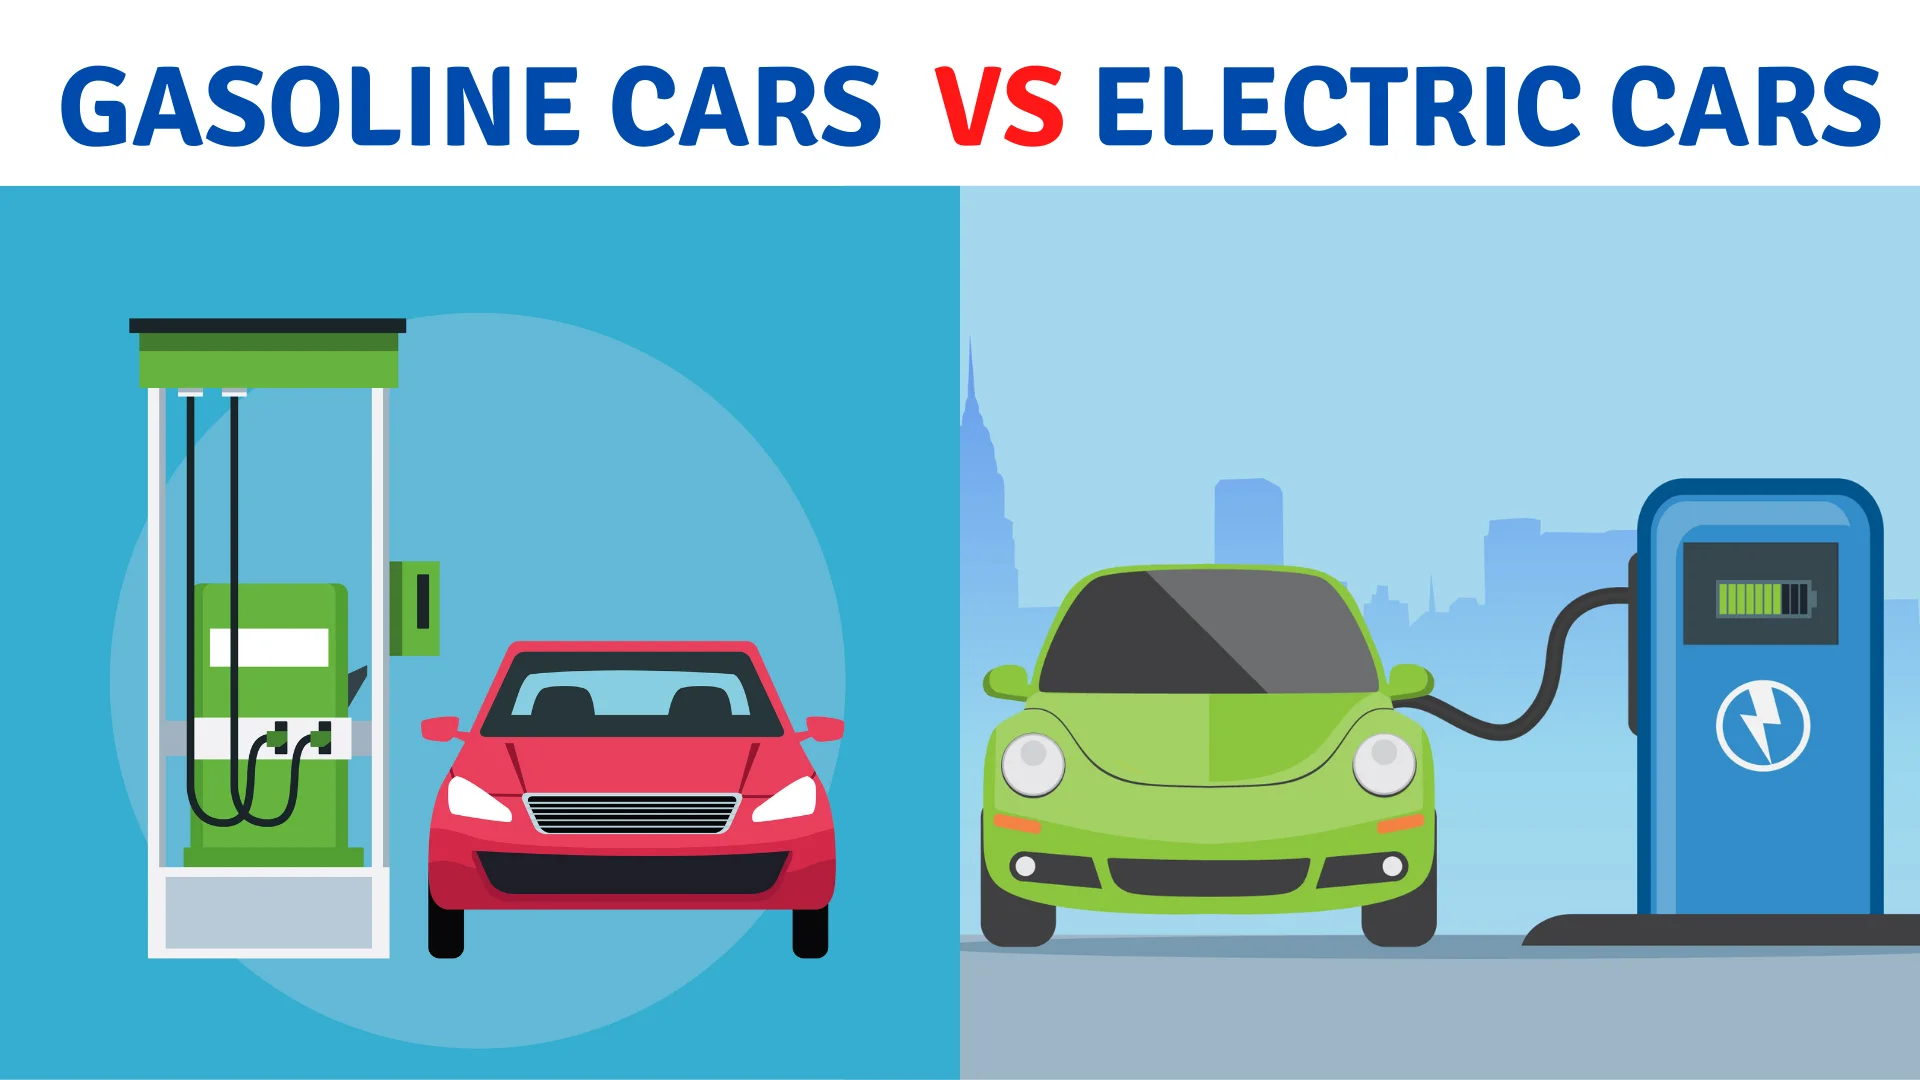 https://e-vehicleinfo.com/electric-cars-vs-gasoline-cars/